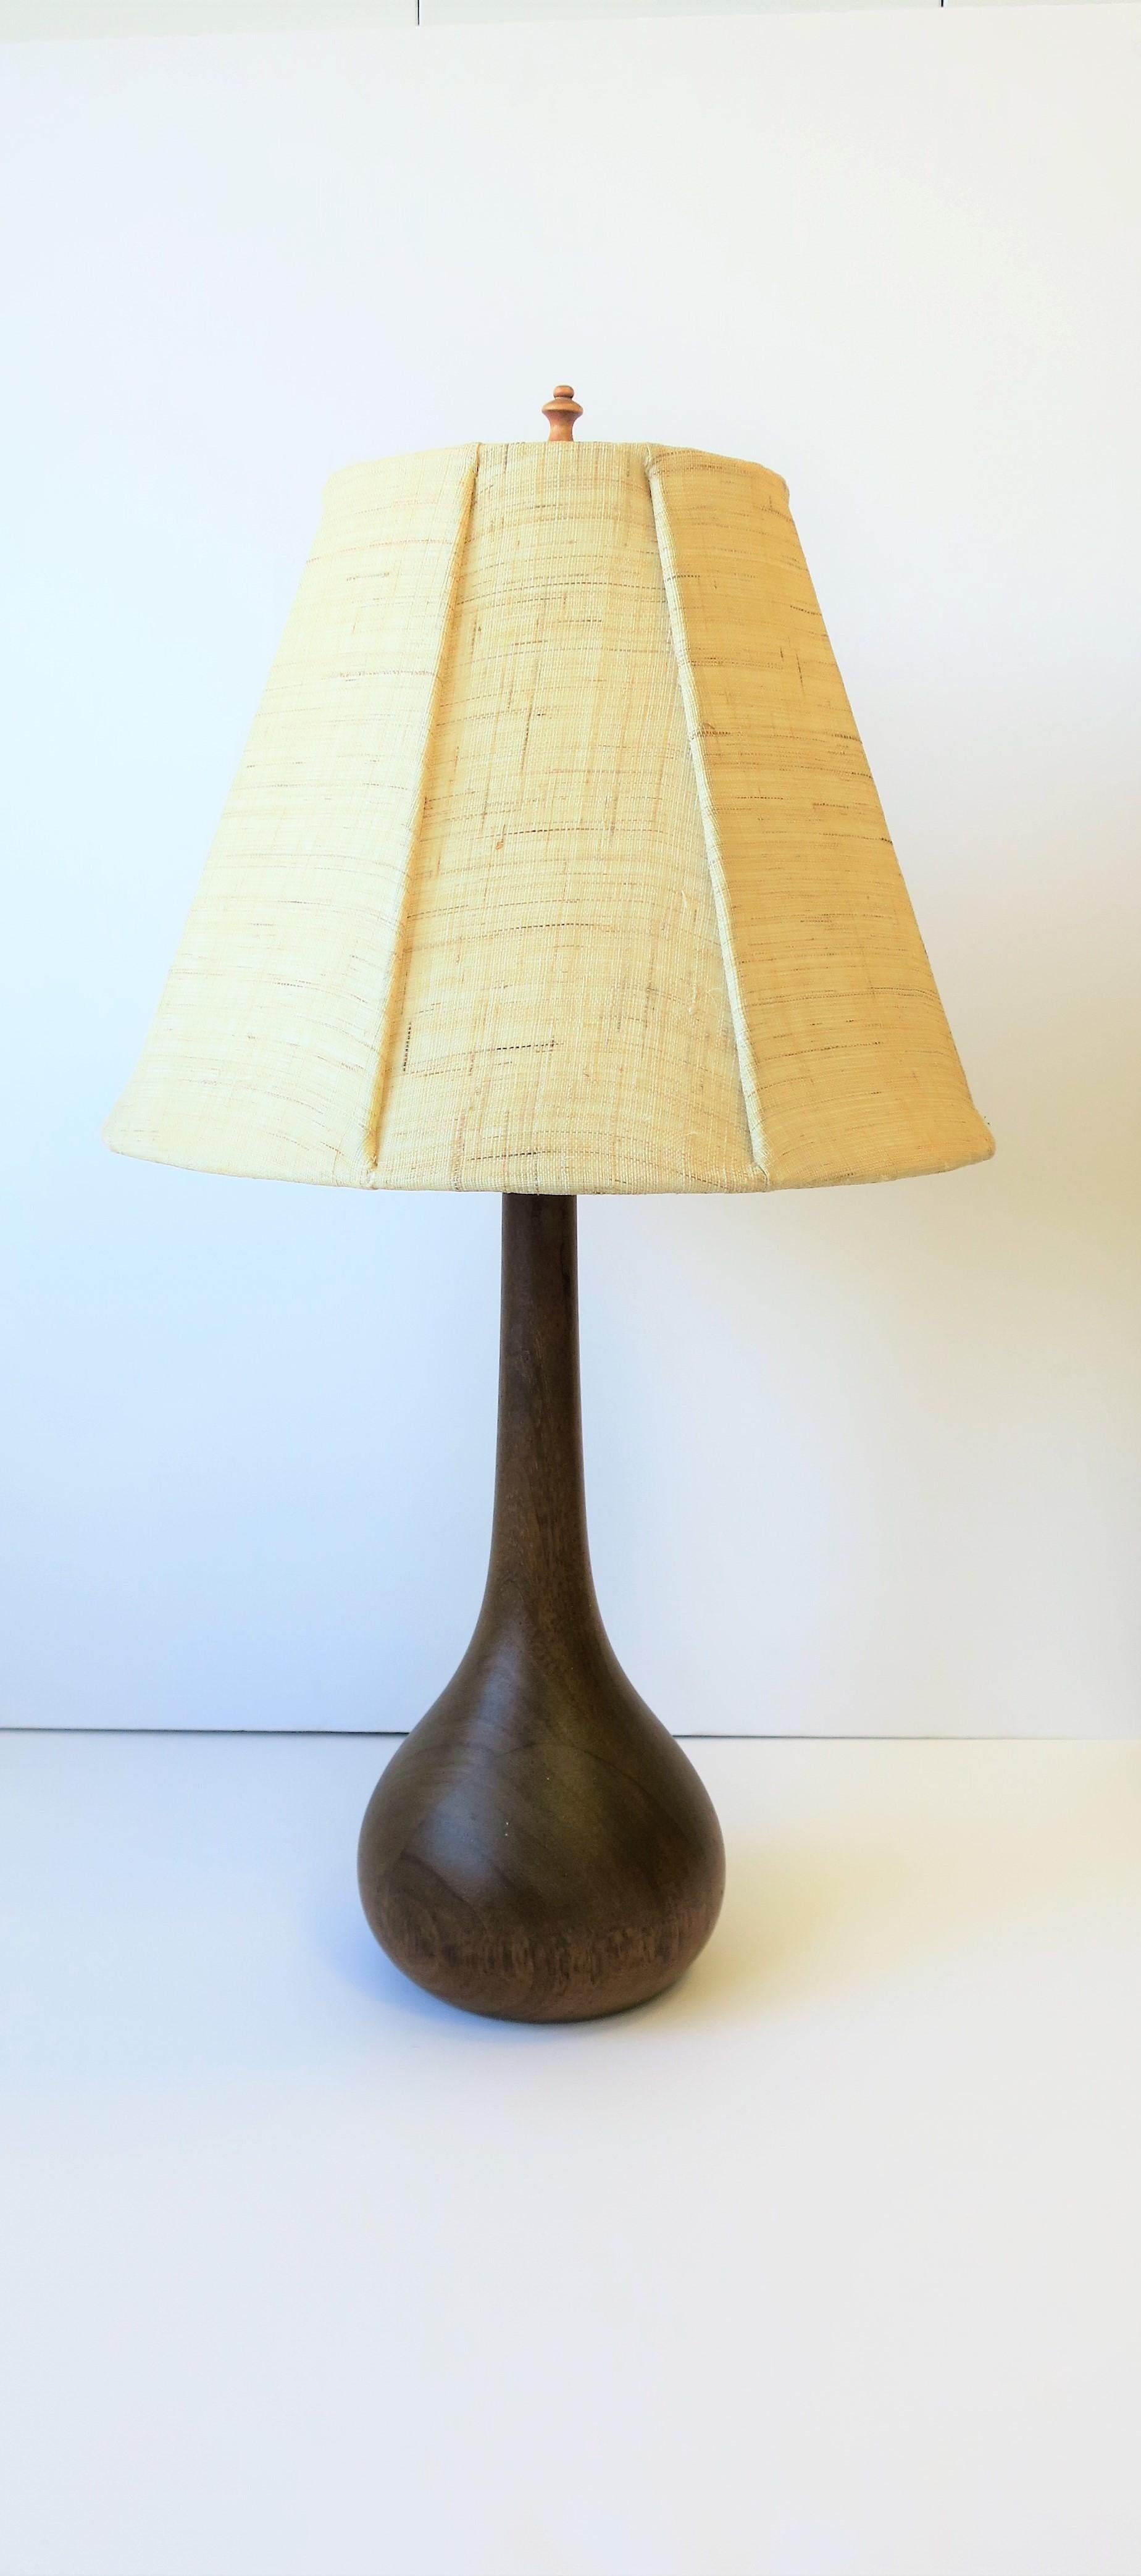 A beautiful Scandinavian or Danish modern organic shaped wood lamp, circa mid-20th century Denmark or Scandinavia. 

Lamp measurements: 
7.5